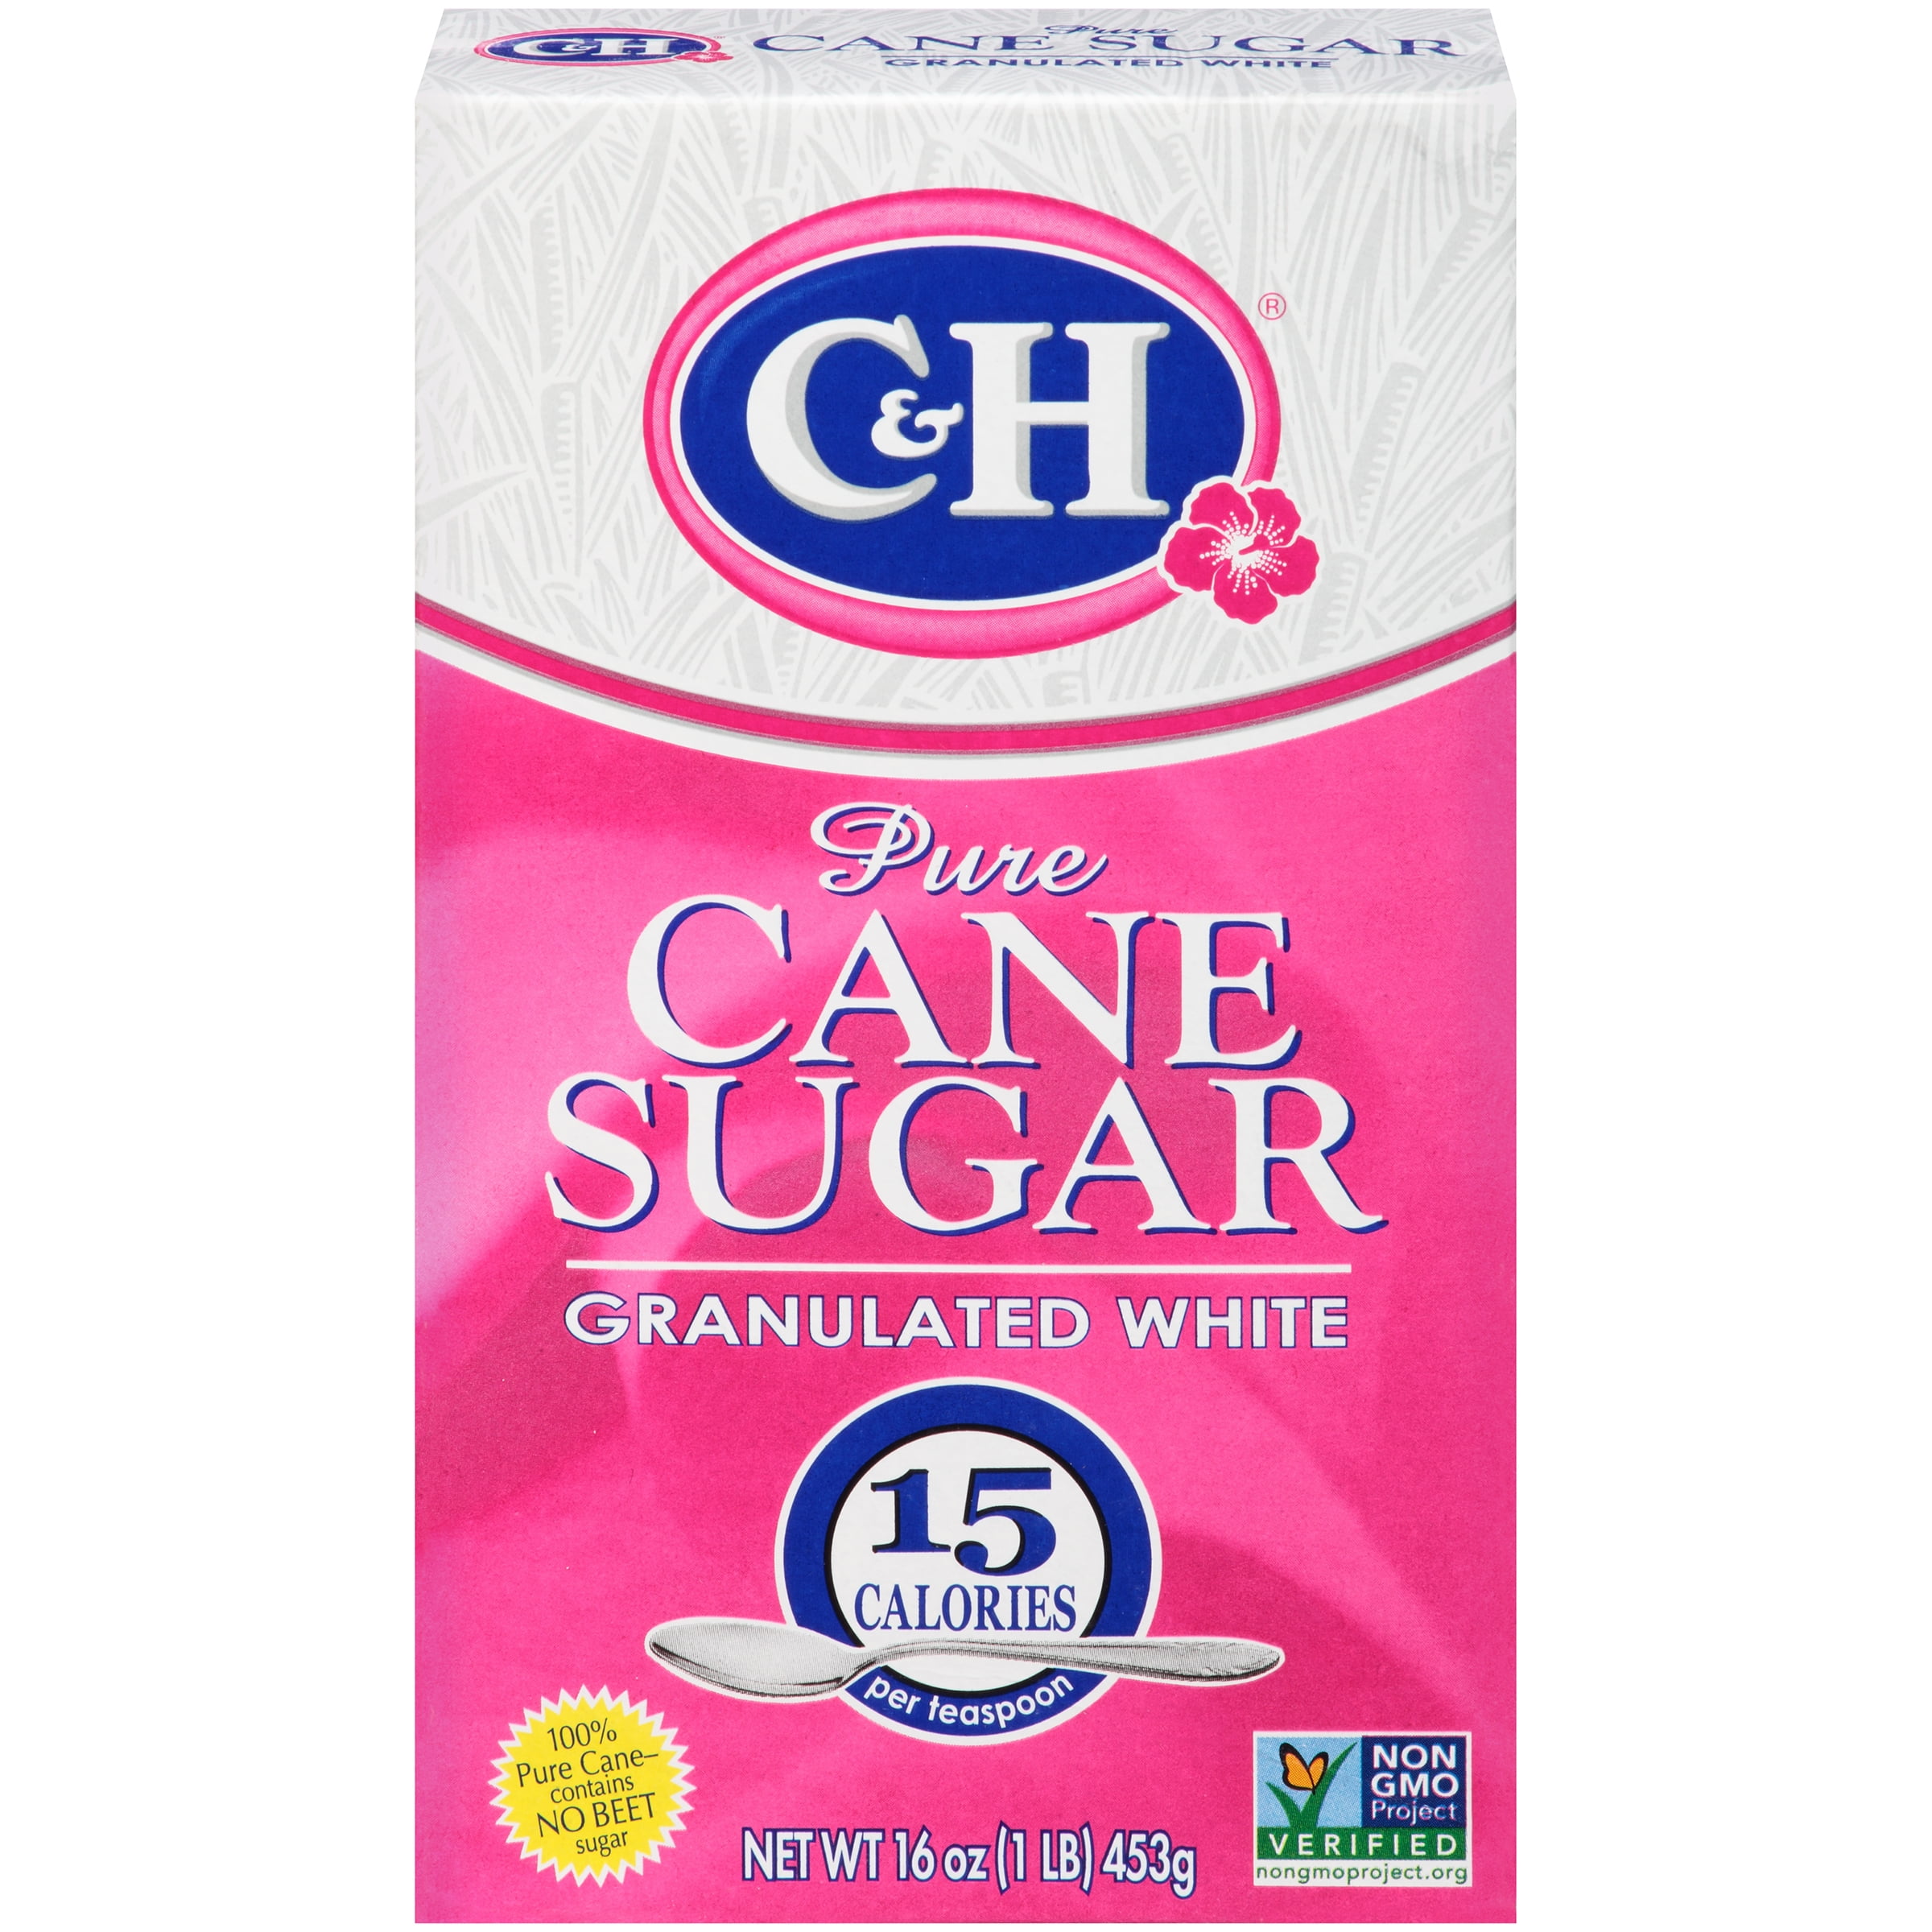 New Box 100 C&H Pure Cane Sugar Individual Packets 